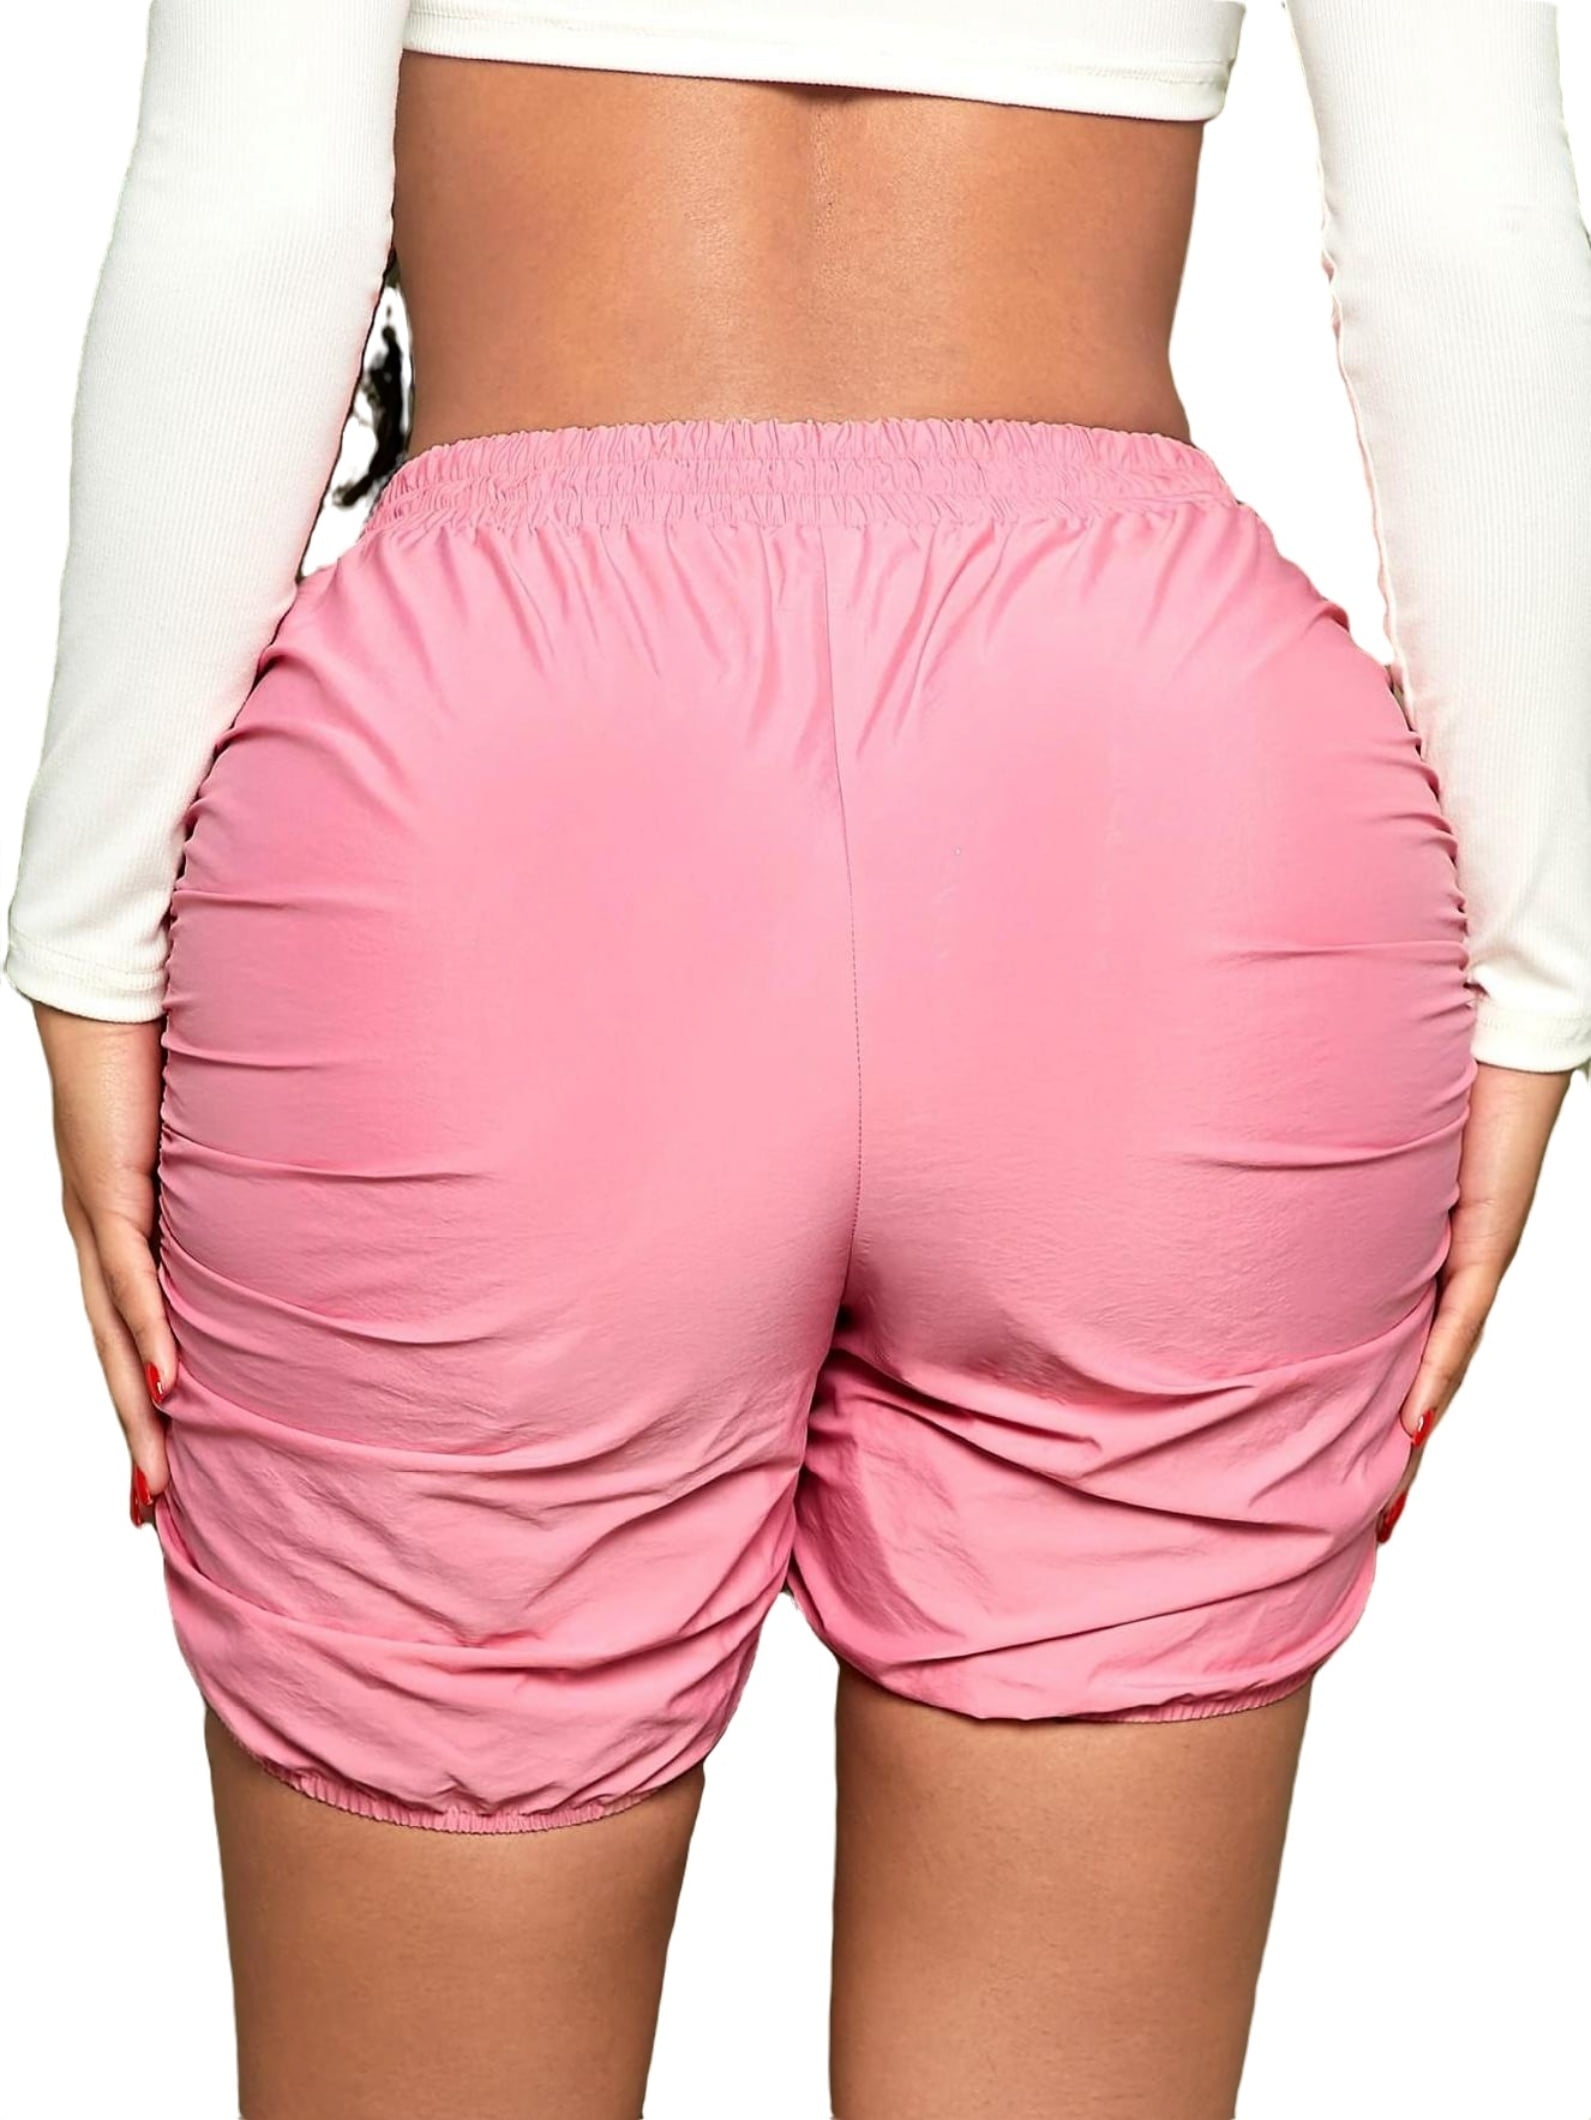 Women's Casual Plain Straight Leg Pink Shorts S